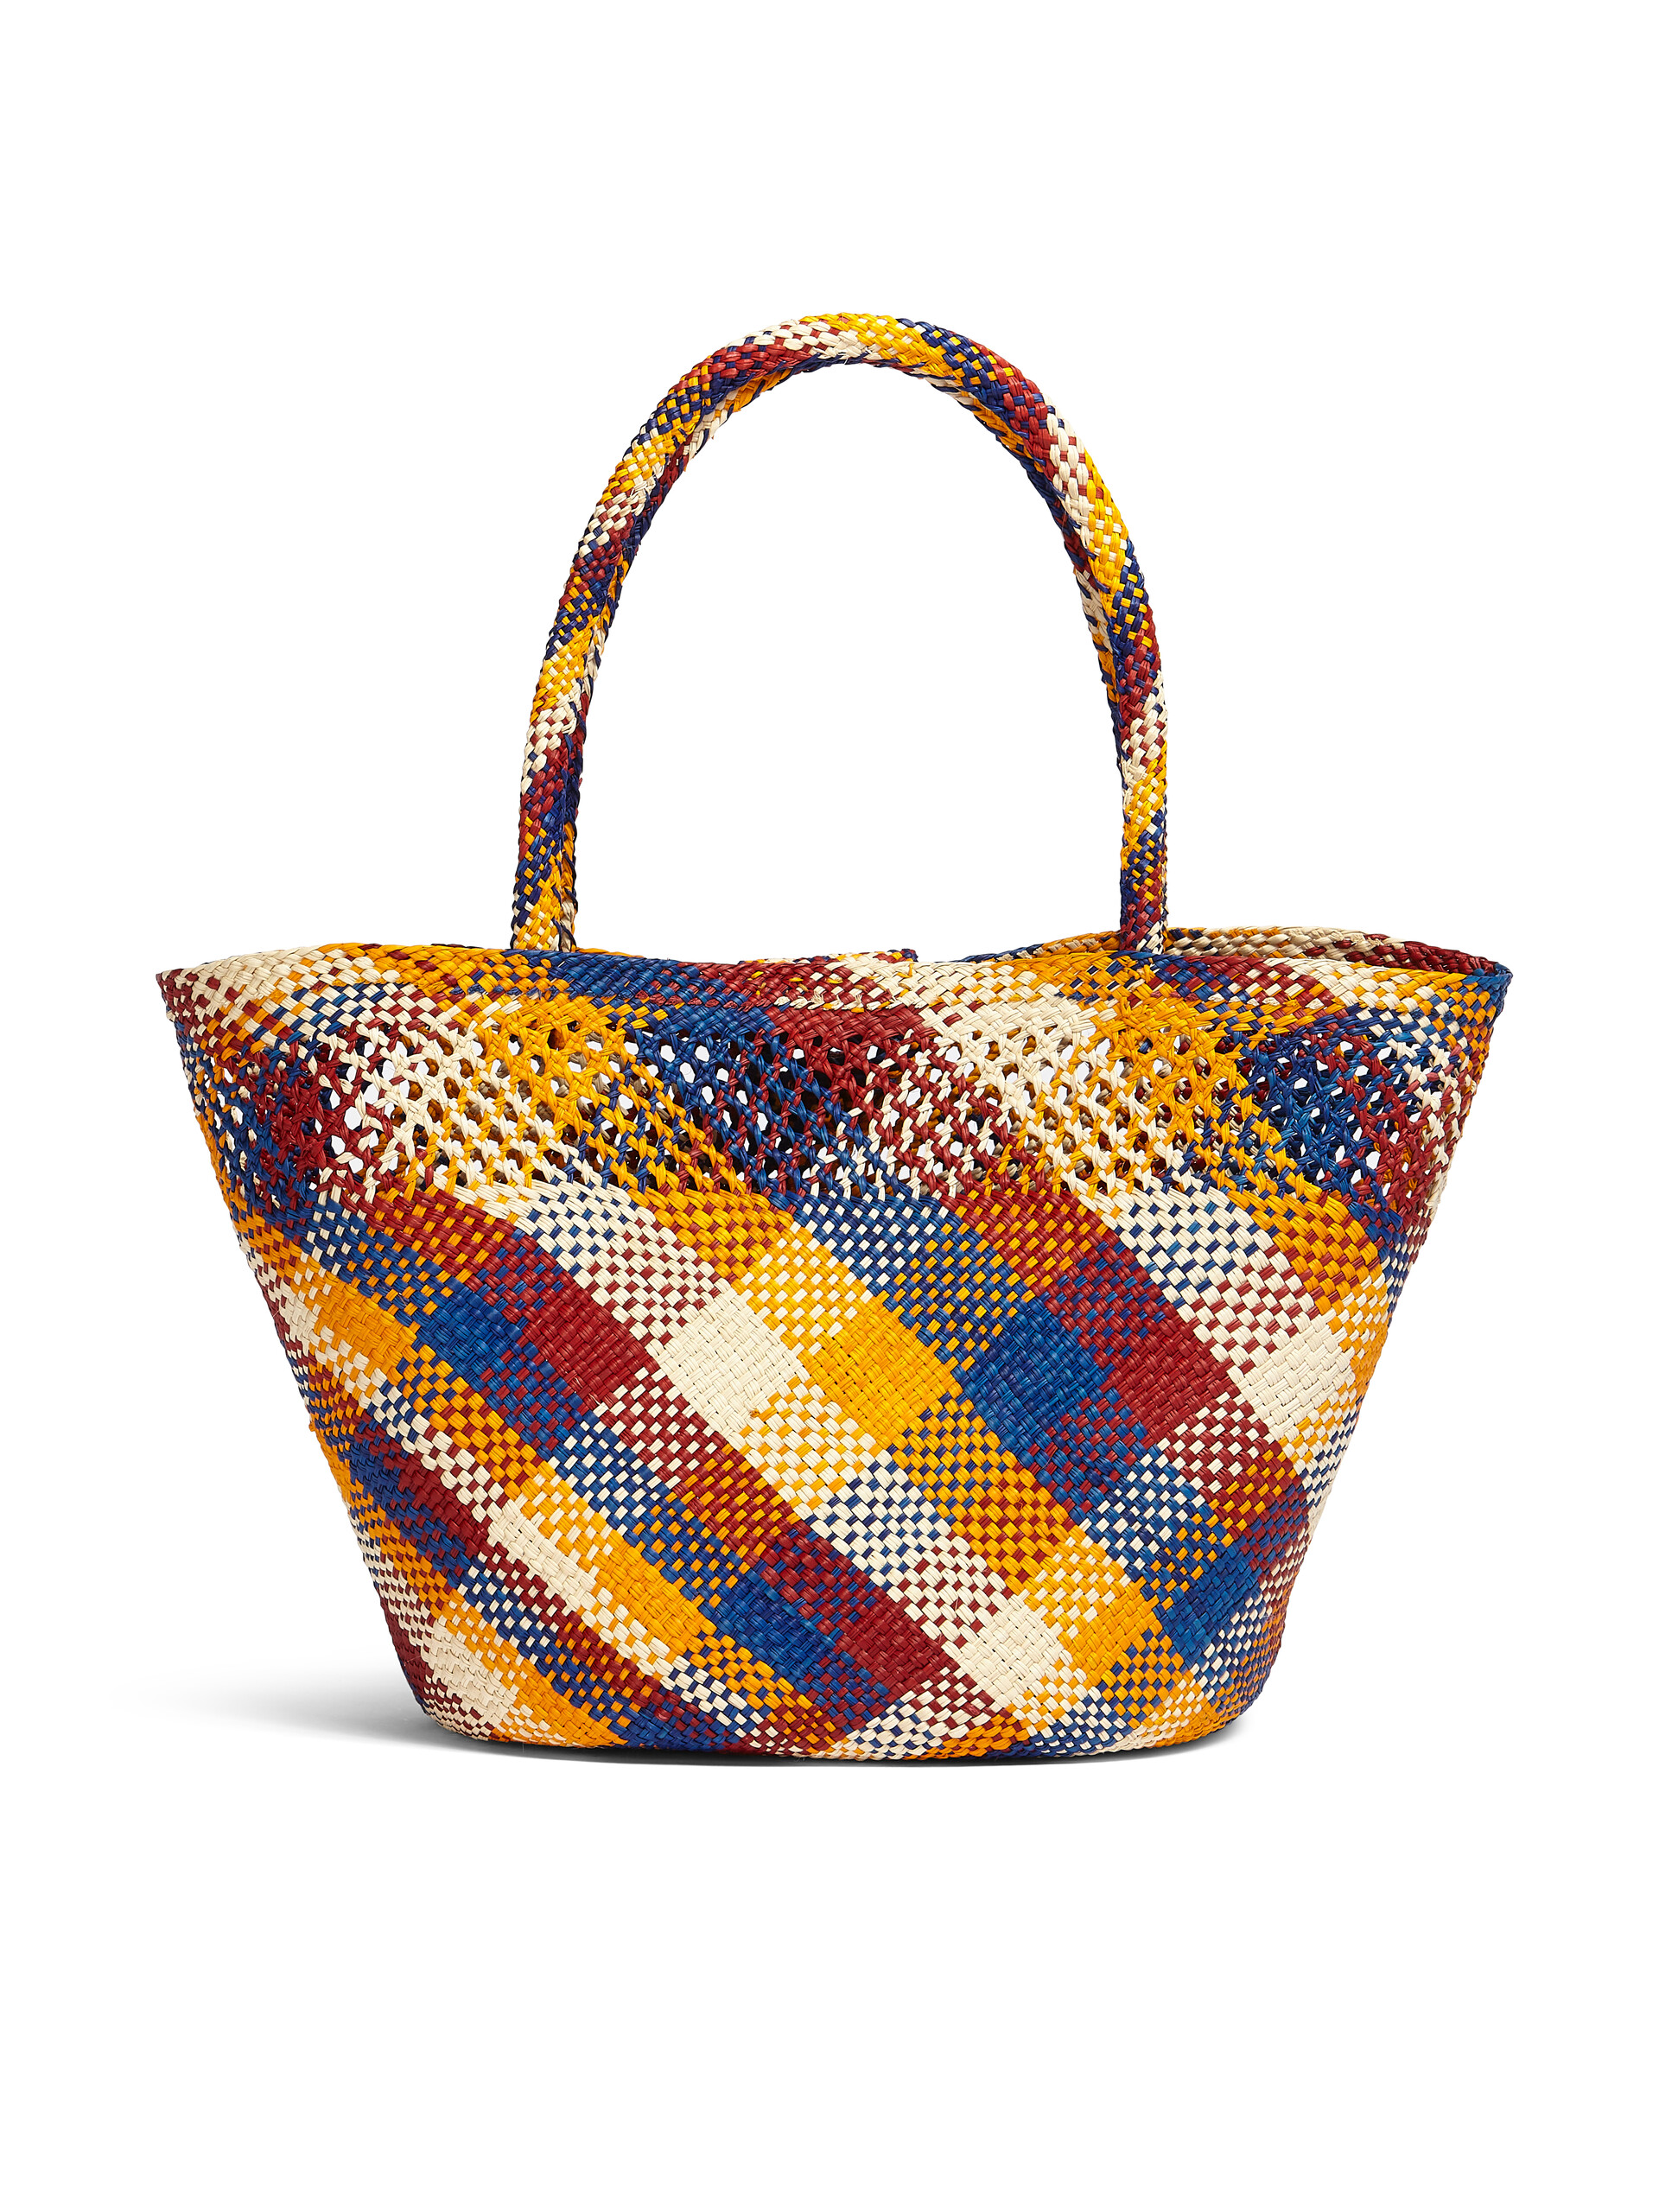 MARNI MARKET BEACH bag in multicolor natural fiber - Bags - Image 3